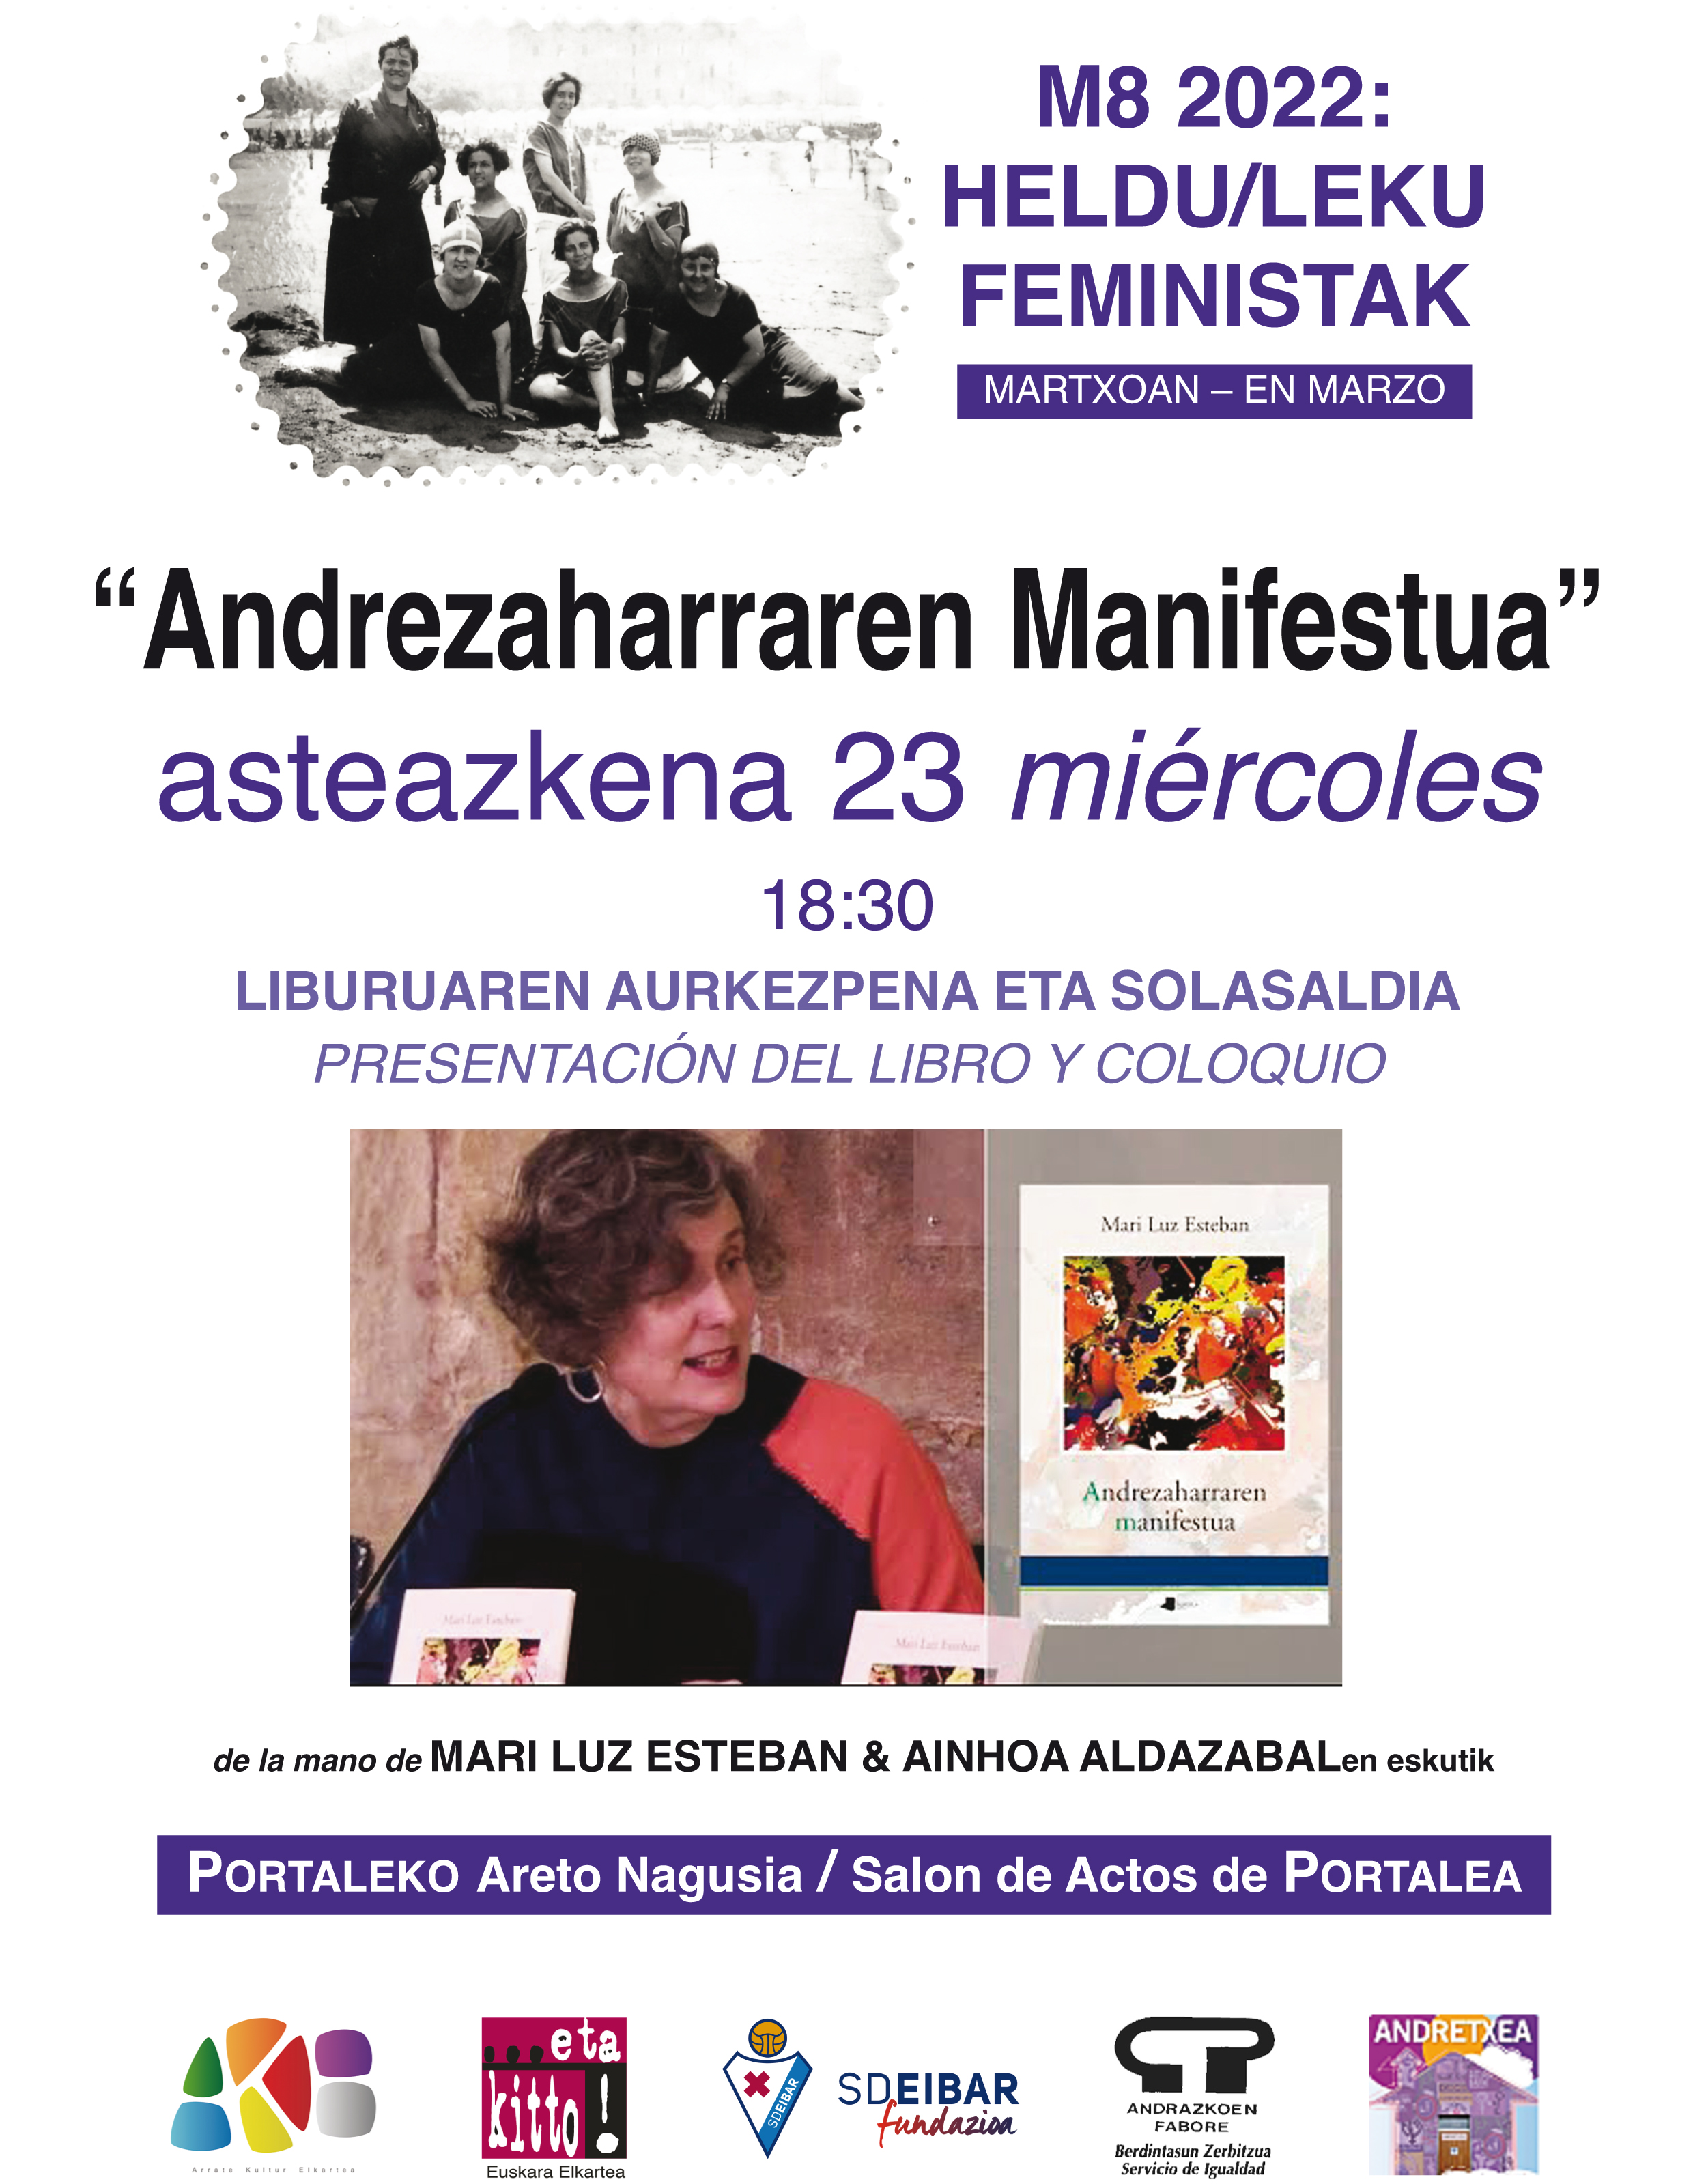 Presentación del libro "Andrezaharraren manifestua" y coloquio